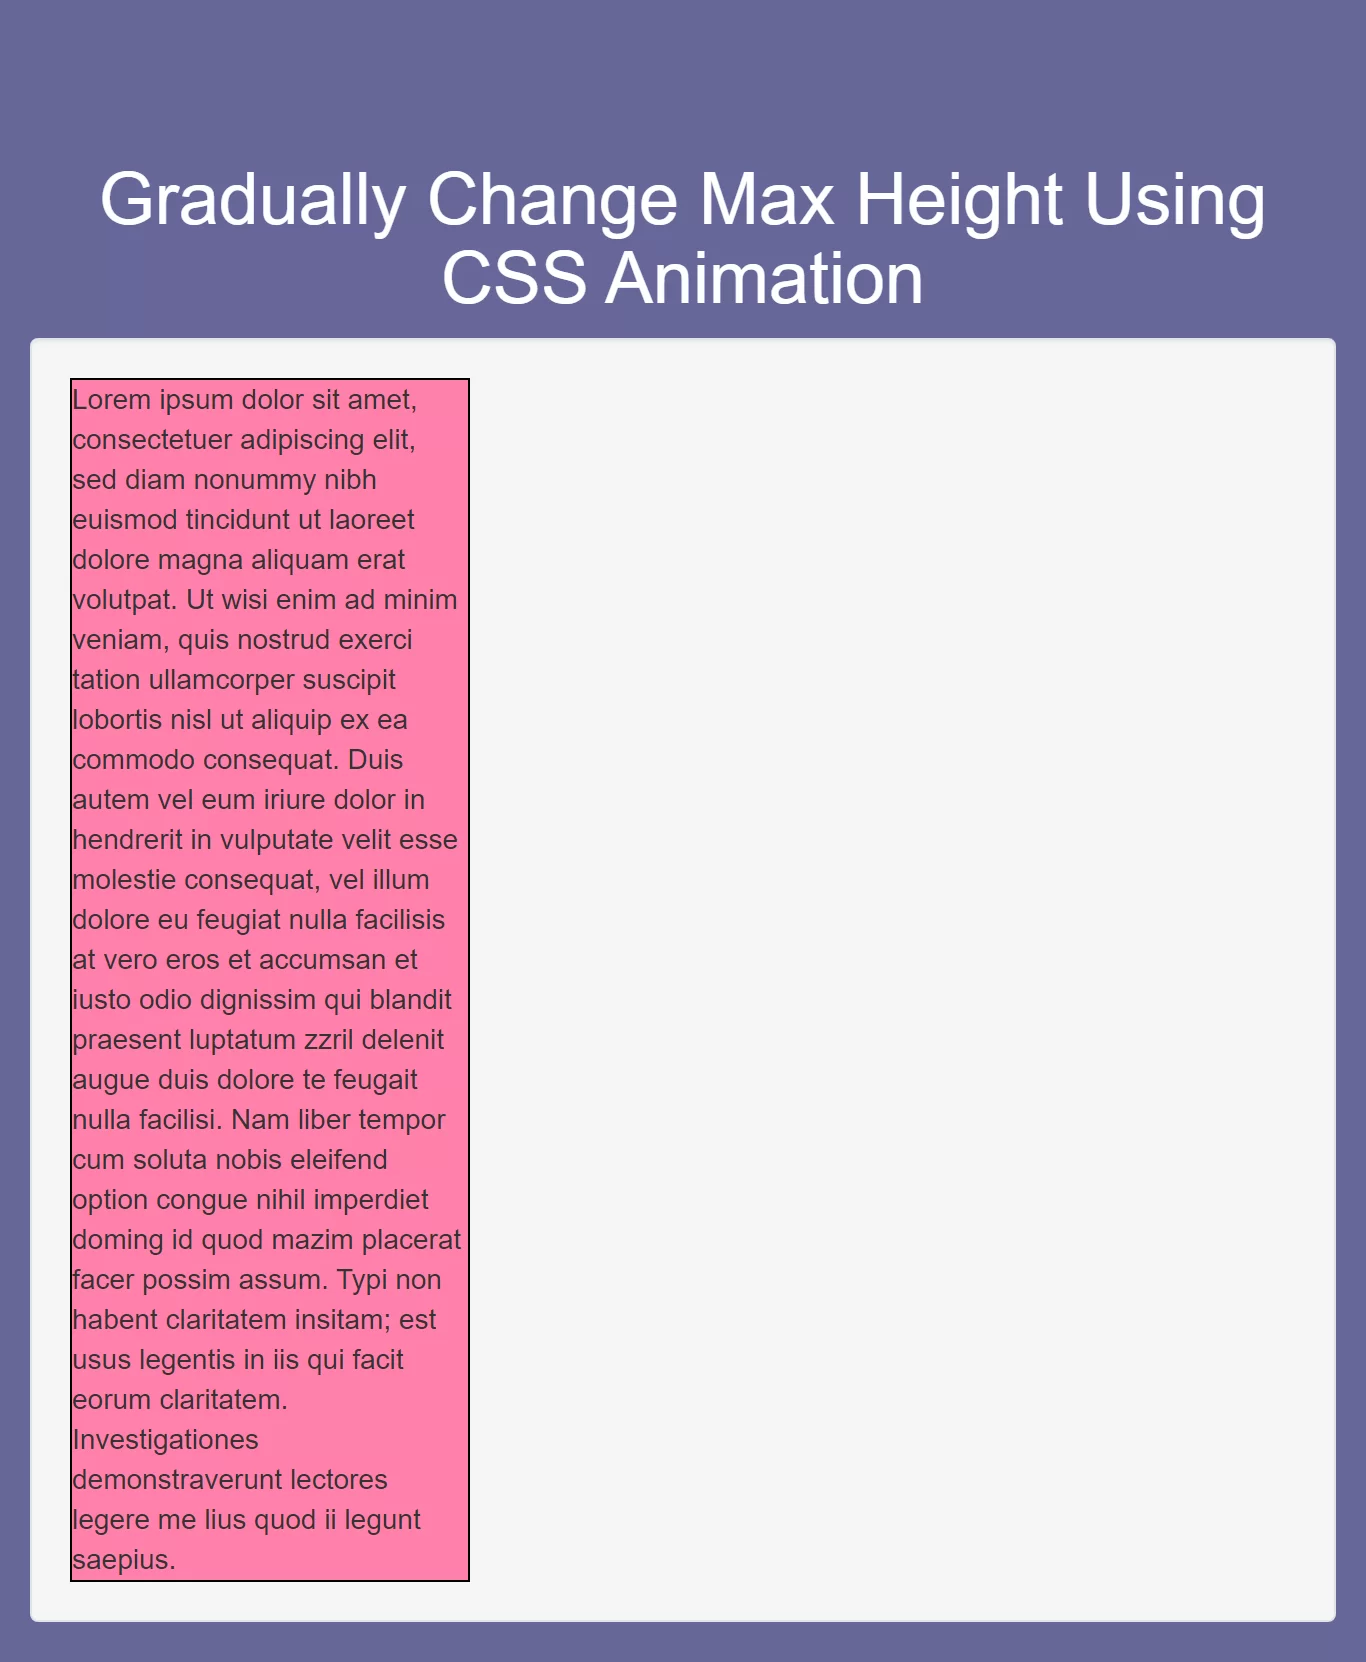 How Gradually Change Max Width Using CSS Animation